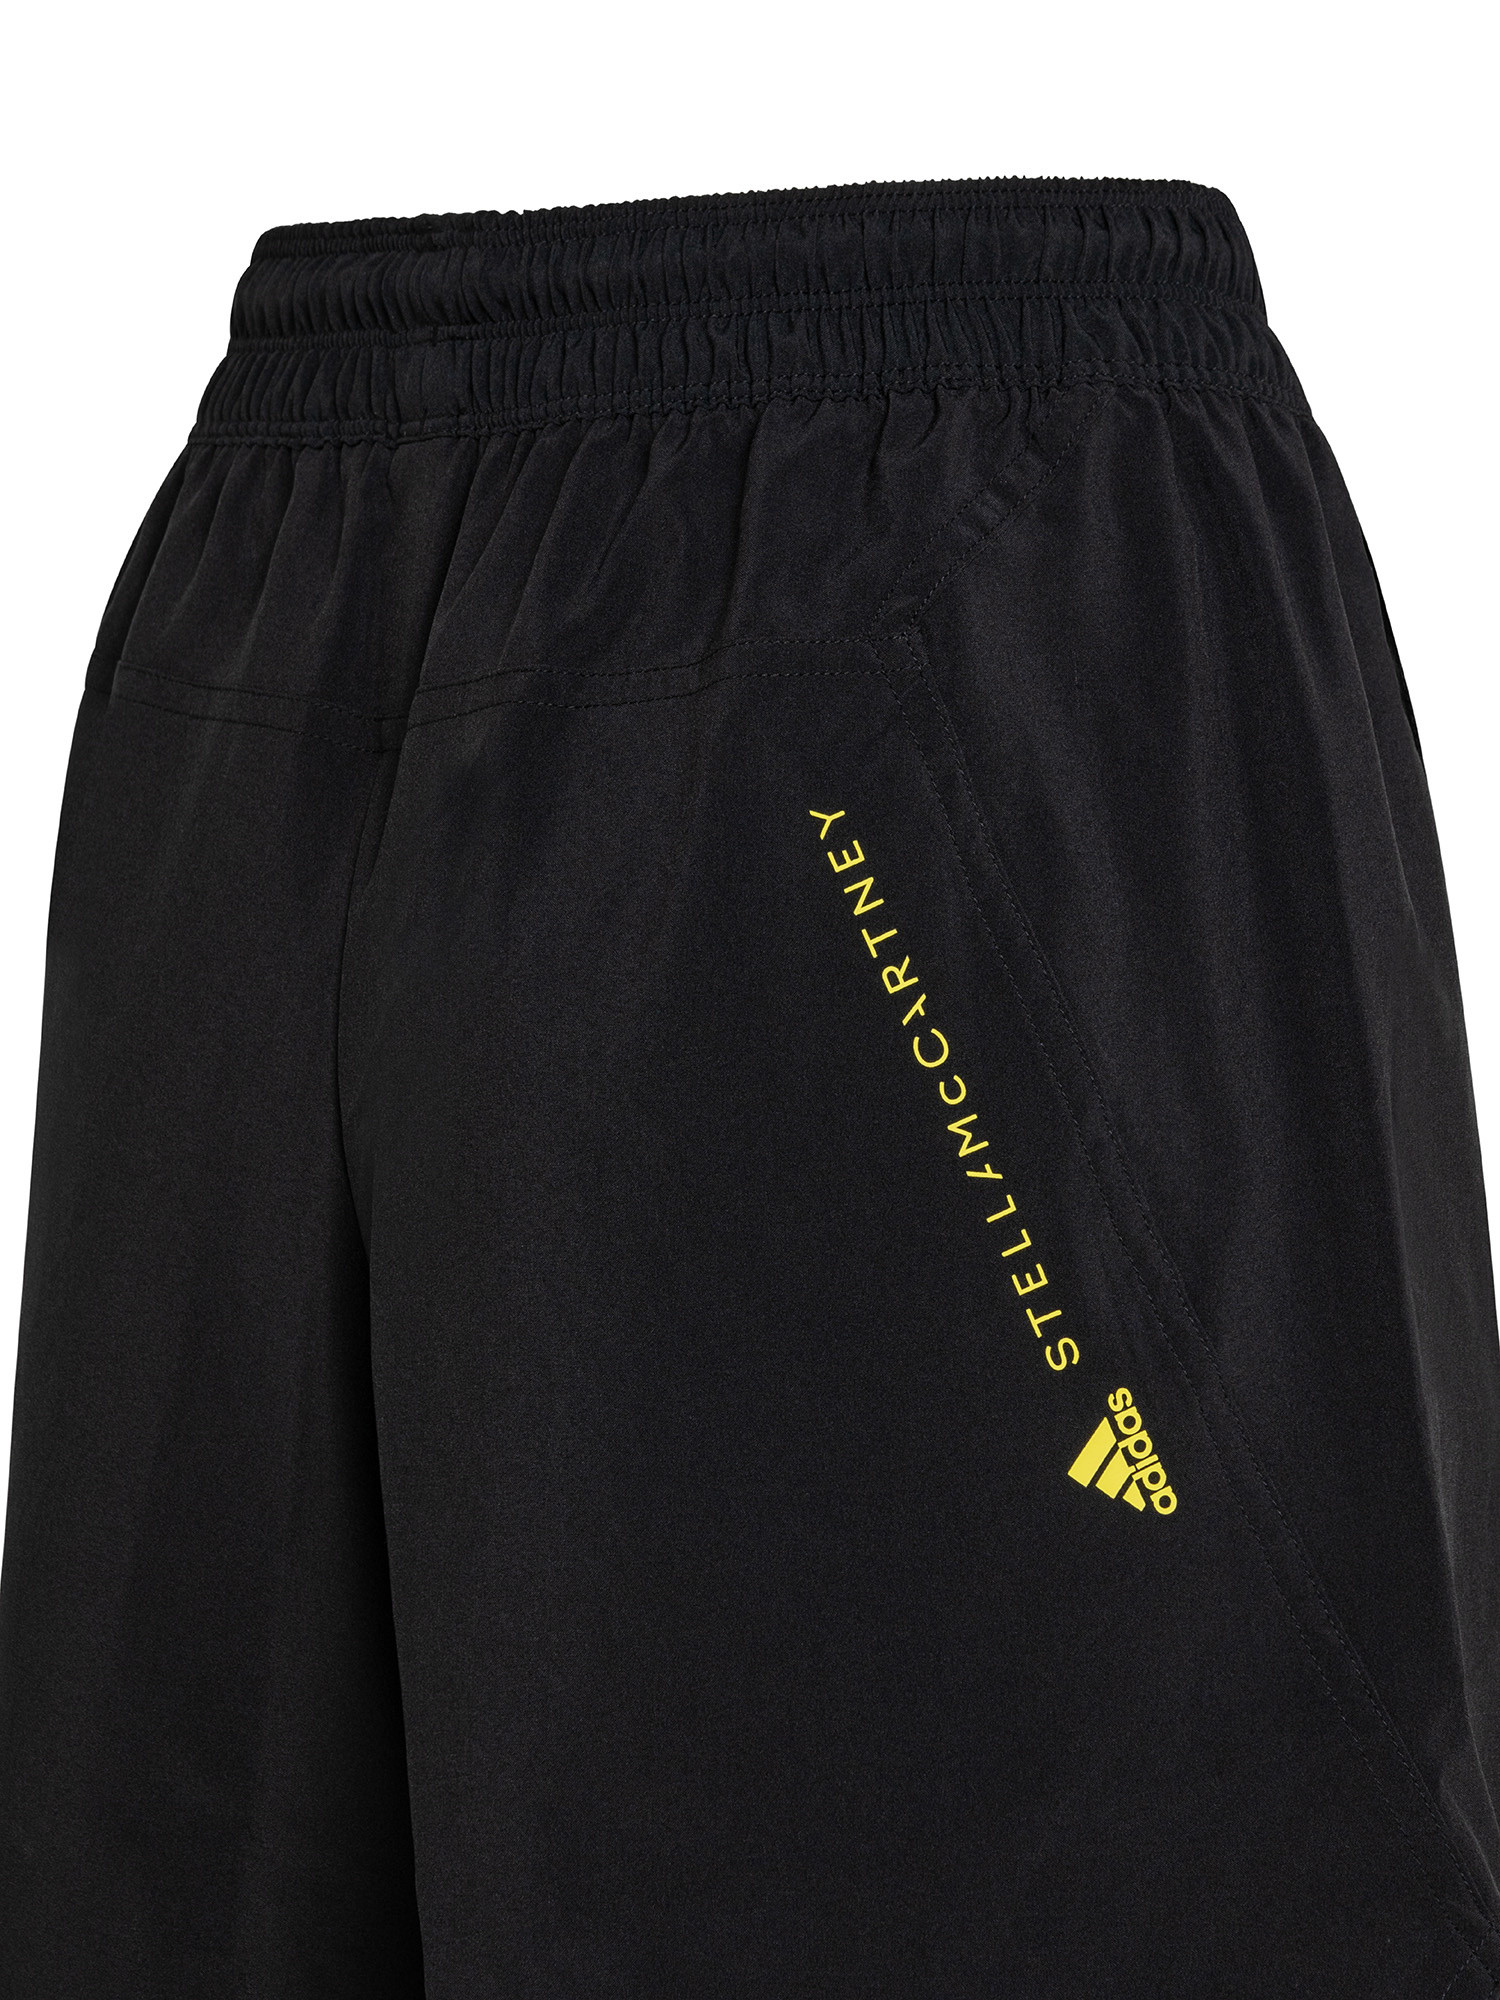 Adidas by Stella McCartney - TruePurpose training shorts, Black, large image number 2